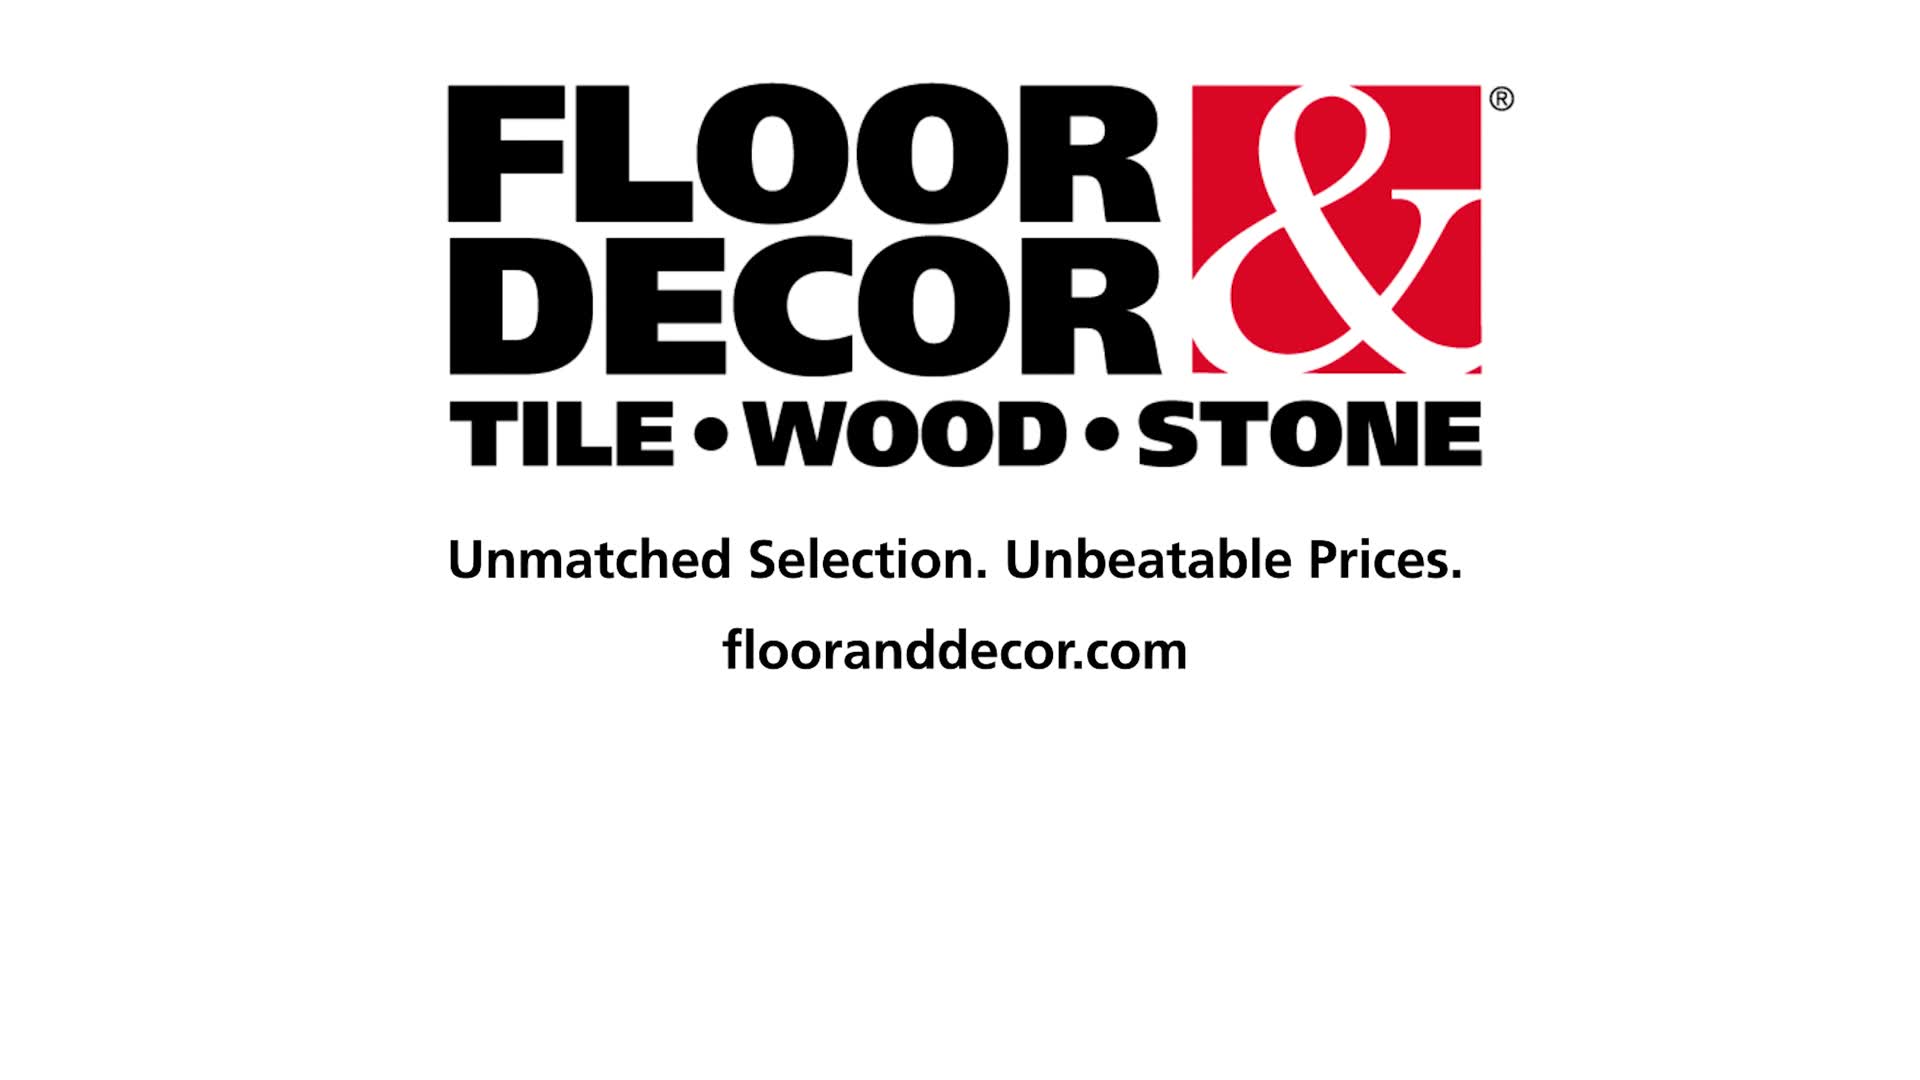 Floor & Decor: a shopping guide & review